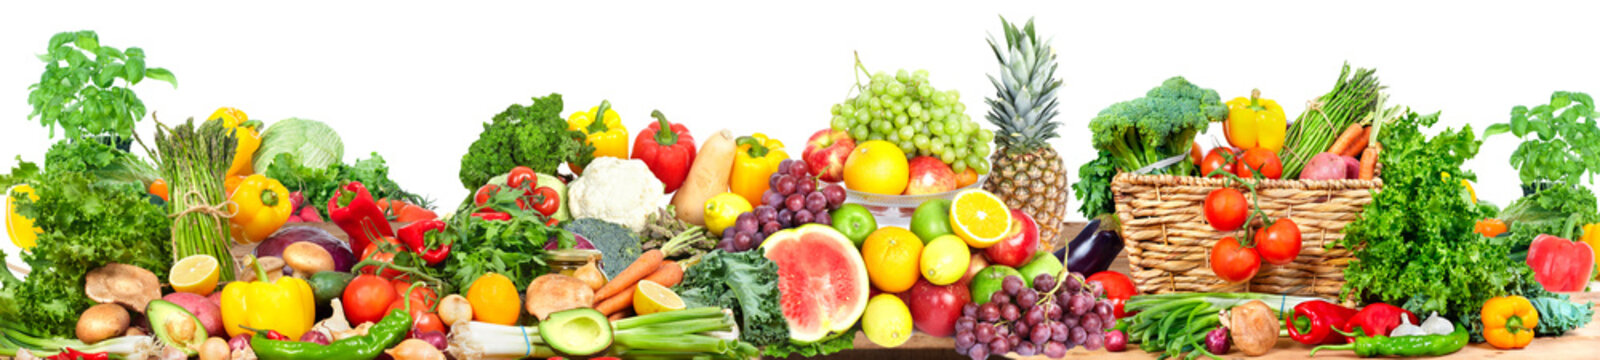 Fototapeta Vegetables and fruits background